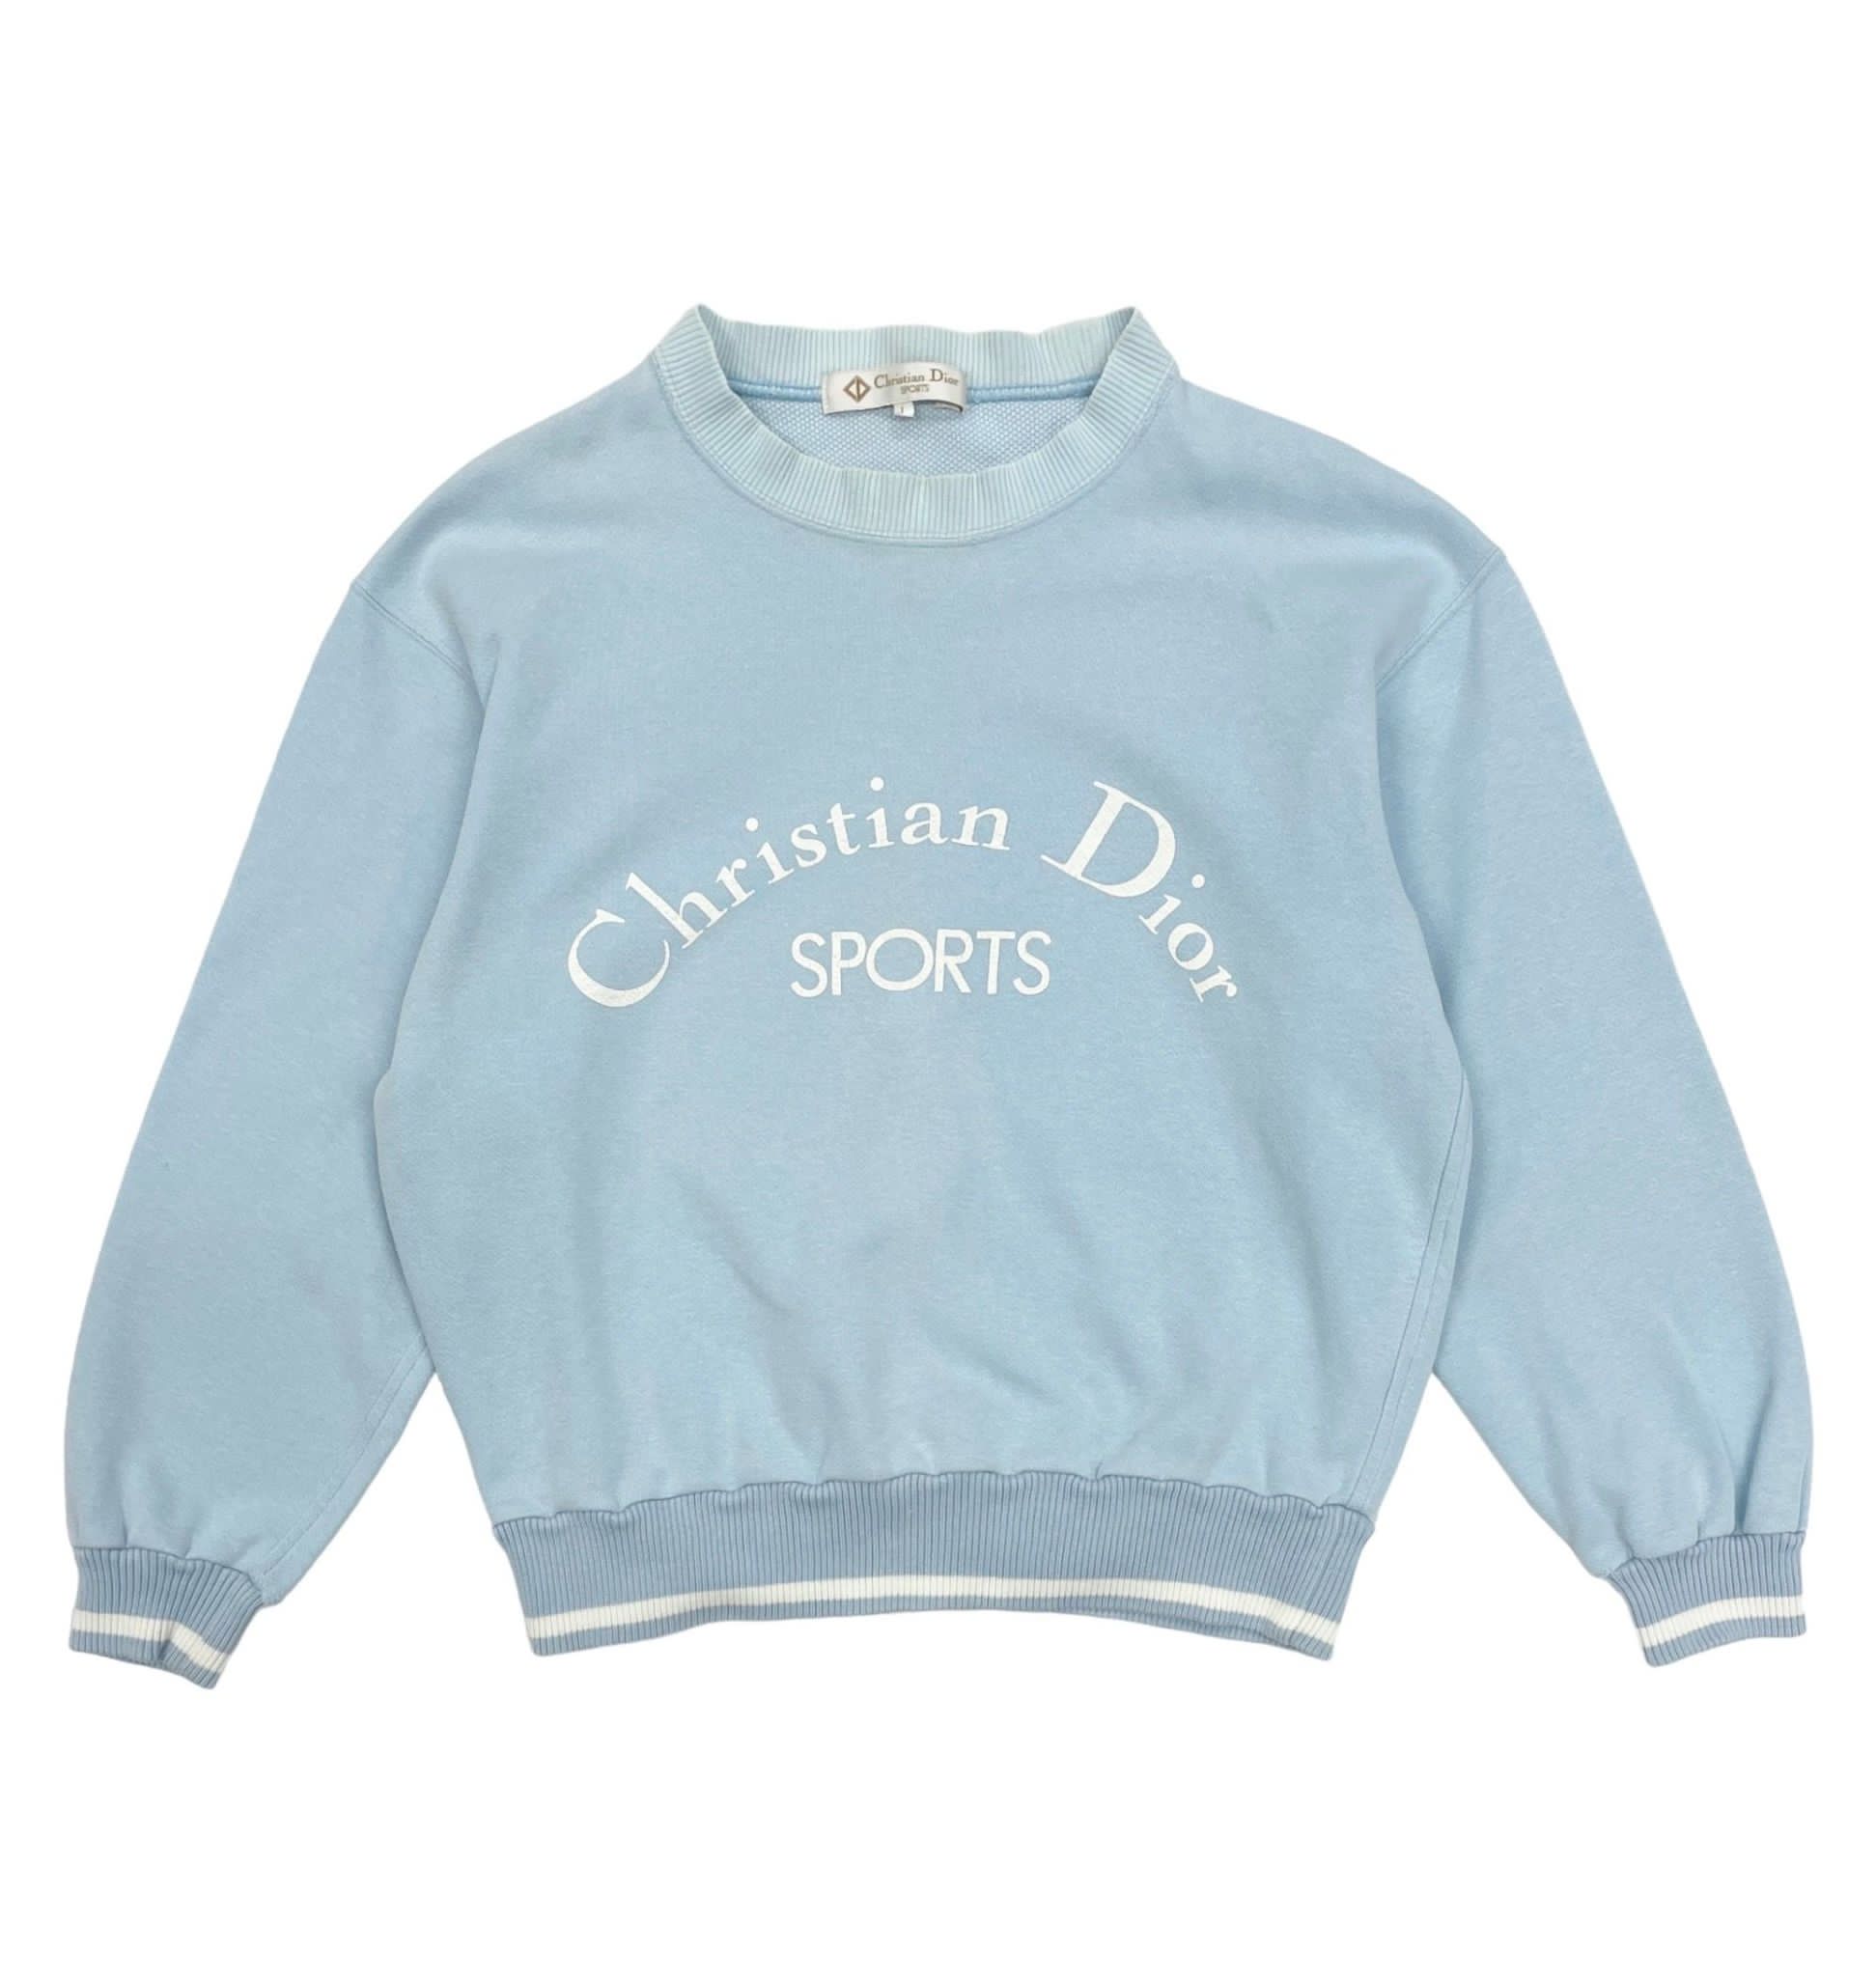 Christian Dior Sports Baby Blue Sweatshirt